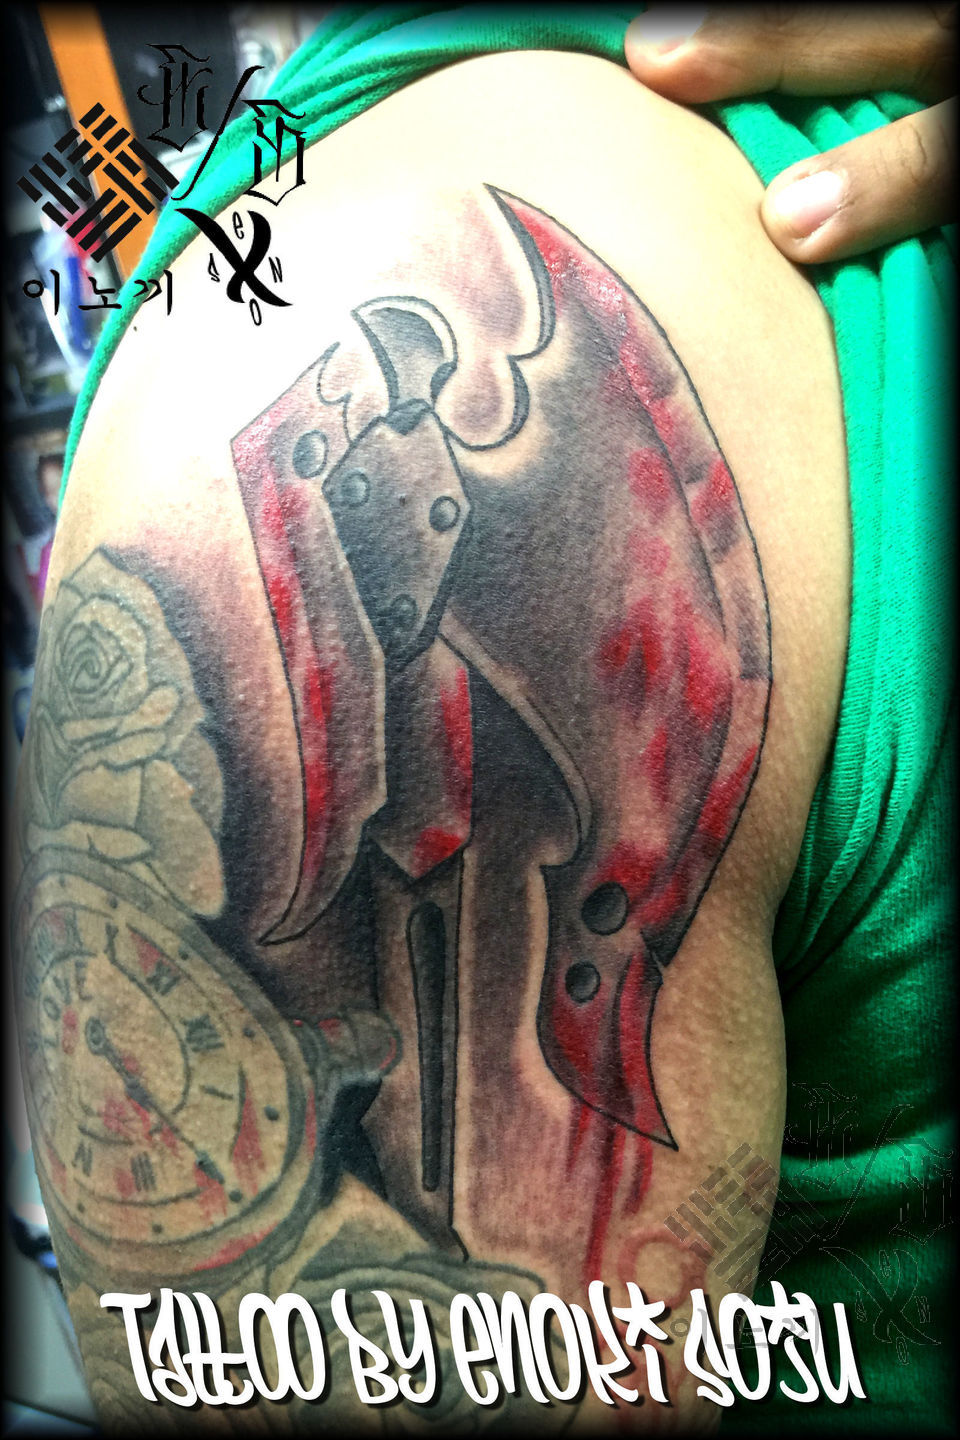 battle axe tattoo